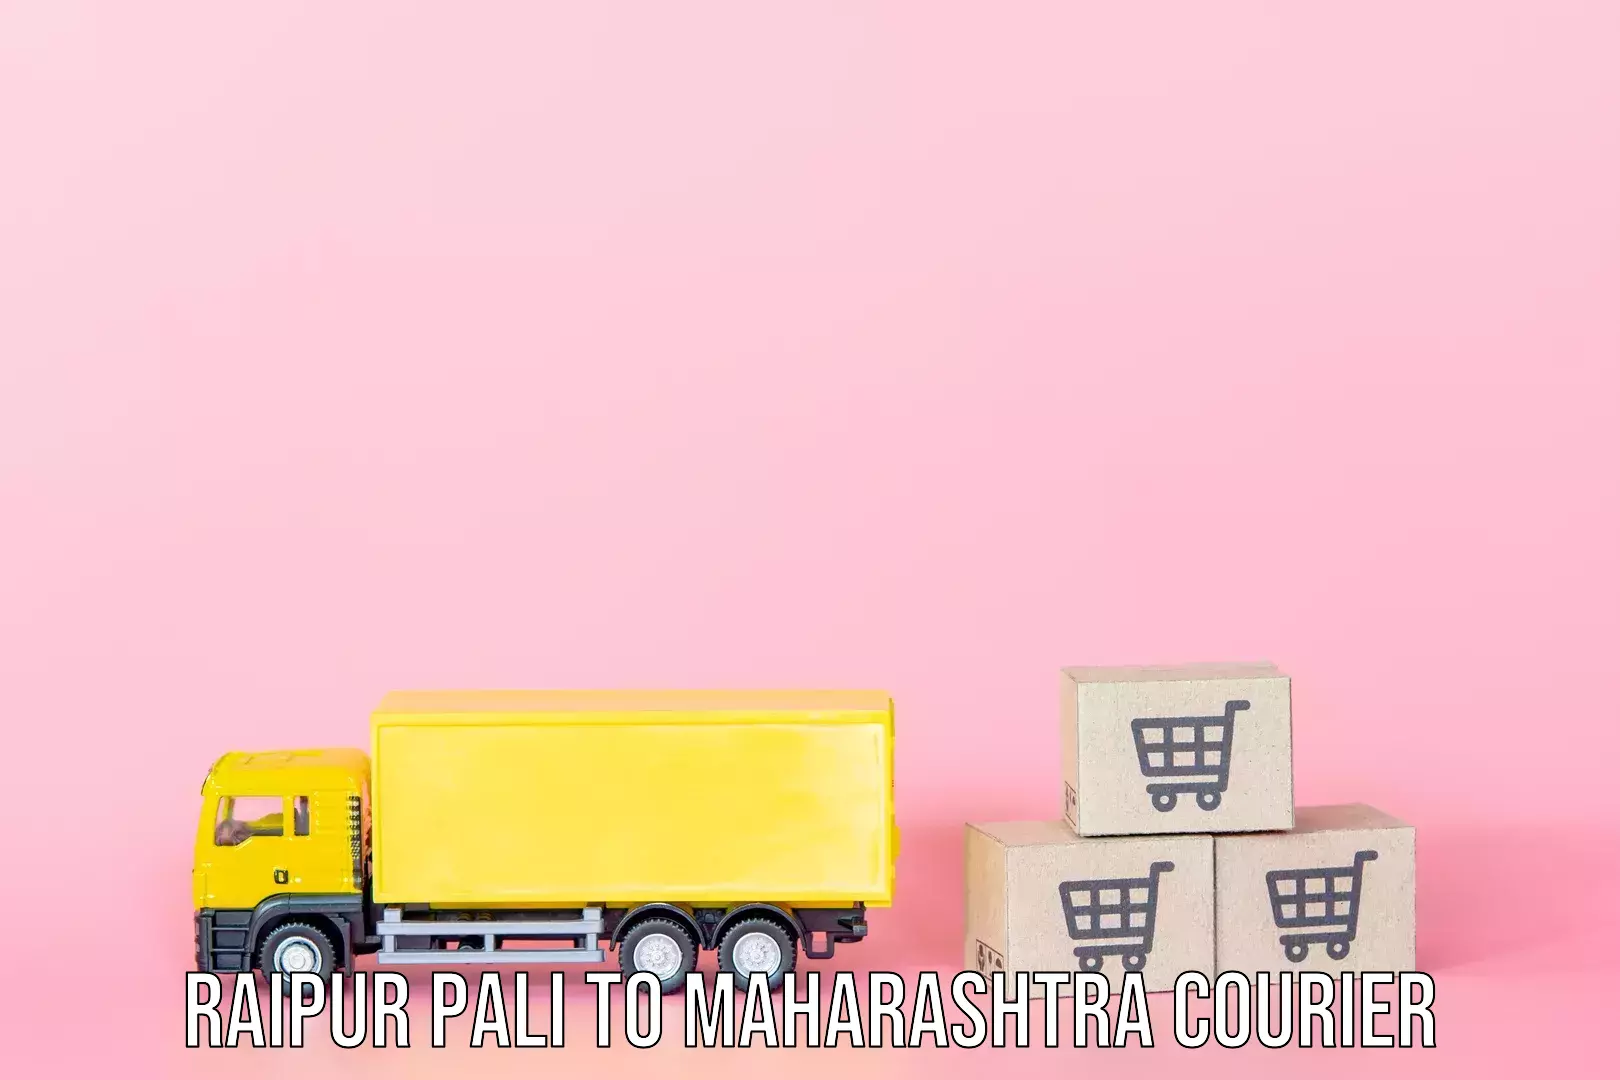 Luggage shipment specialists Raipur Pali to Maharashtra